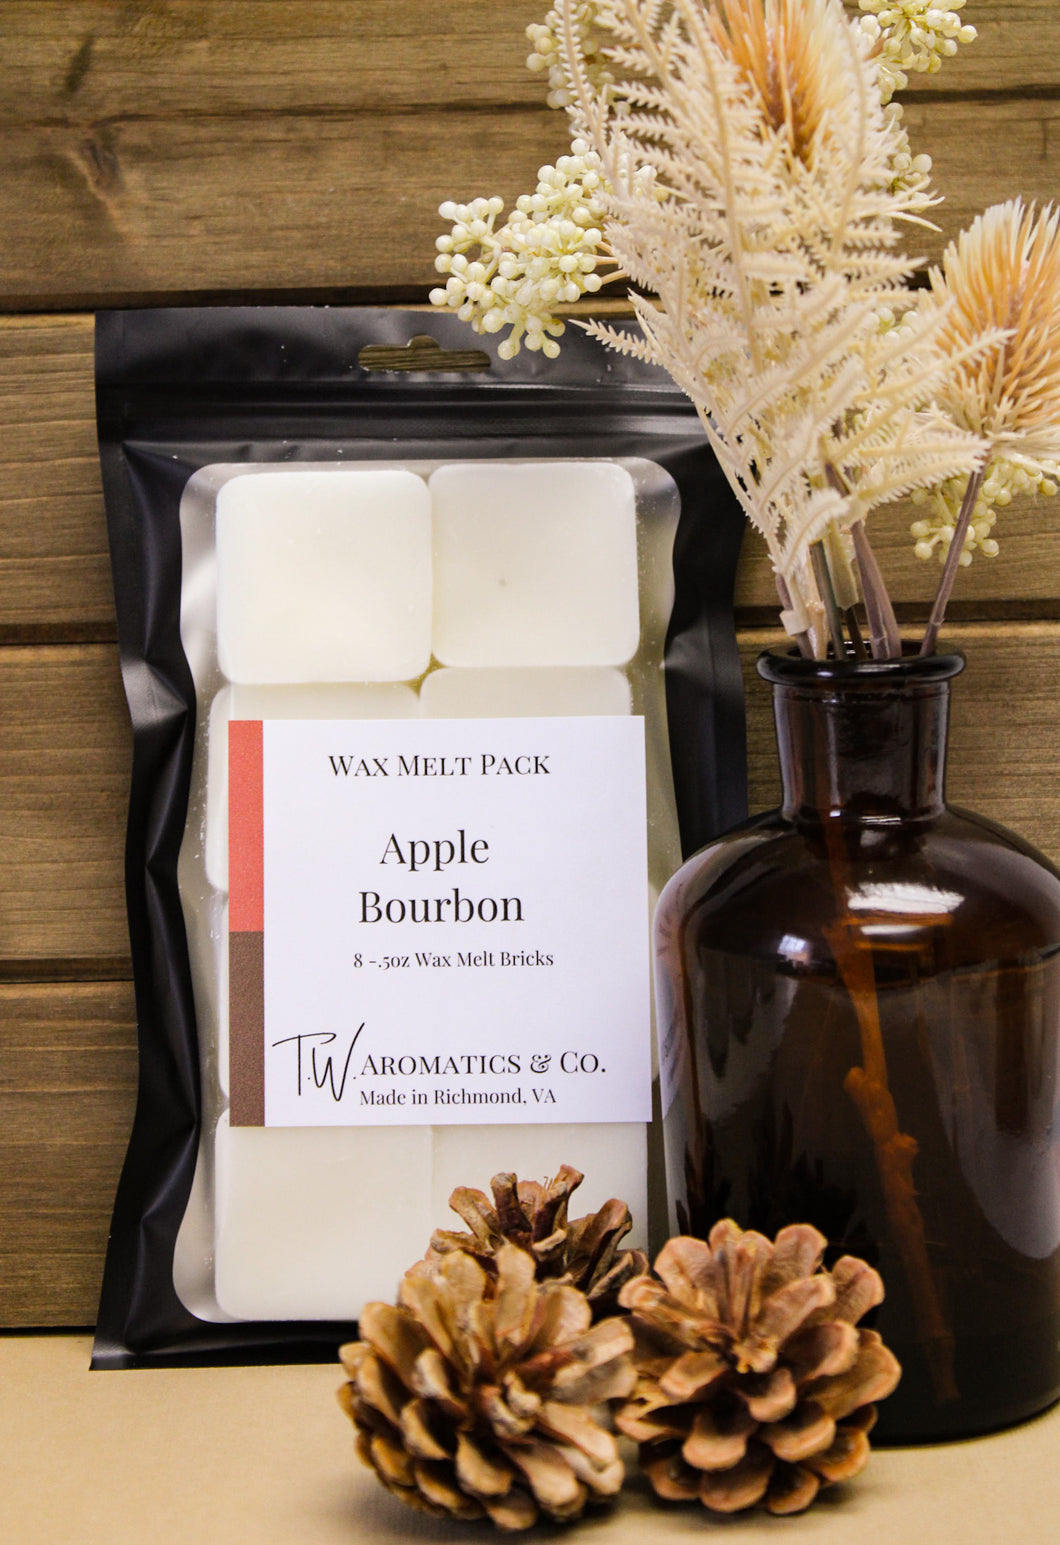 Apple Bourbon, 8 Count Wax Melt Pack - T. W. Aromatics & Co.